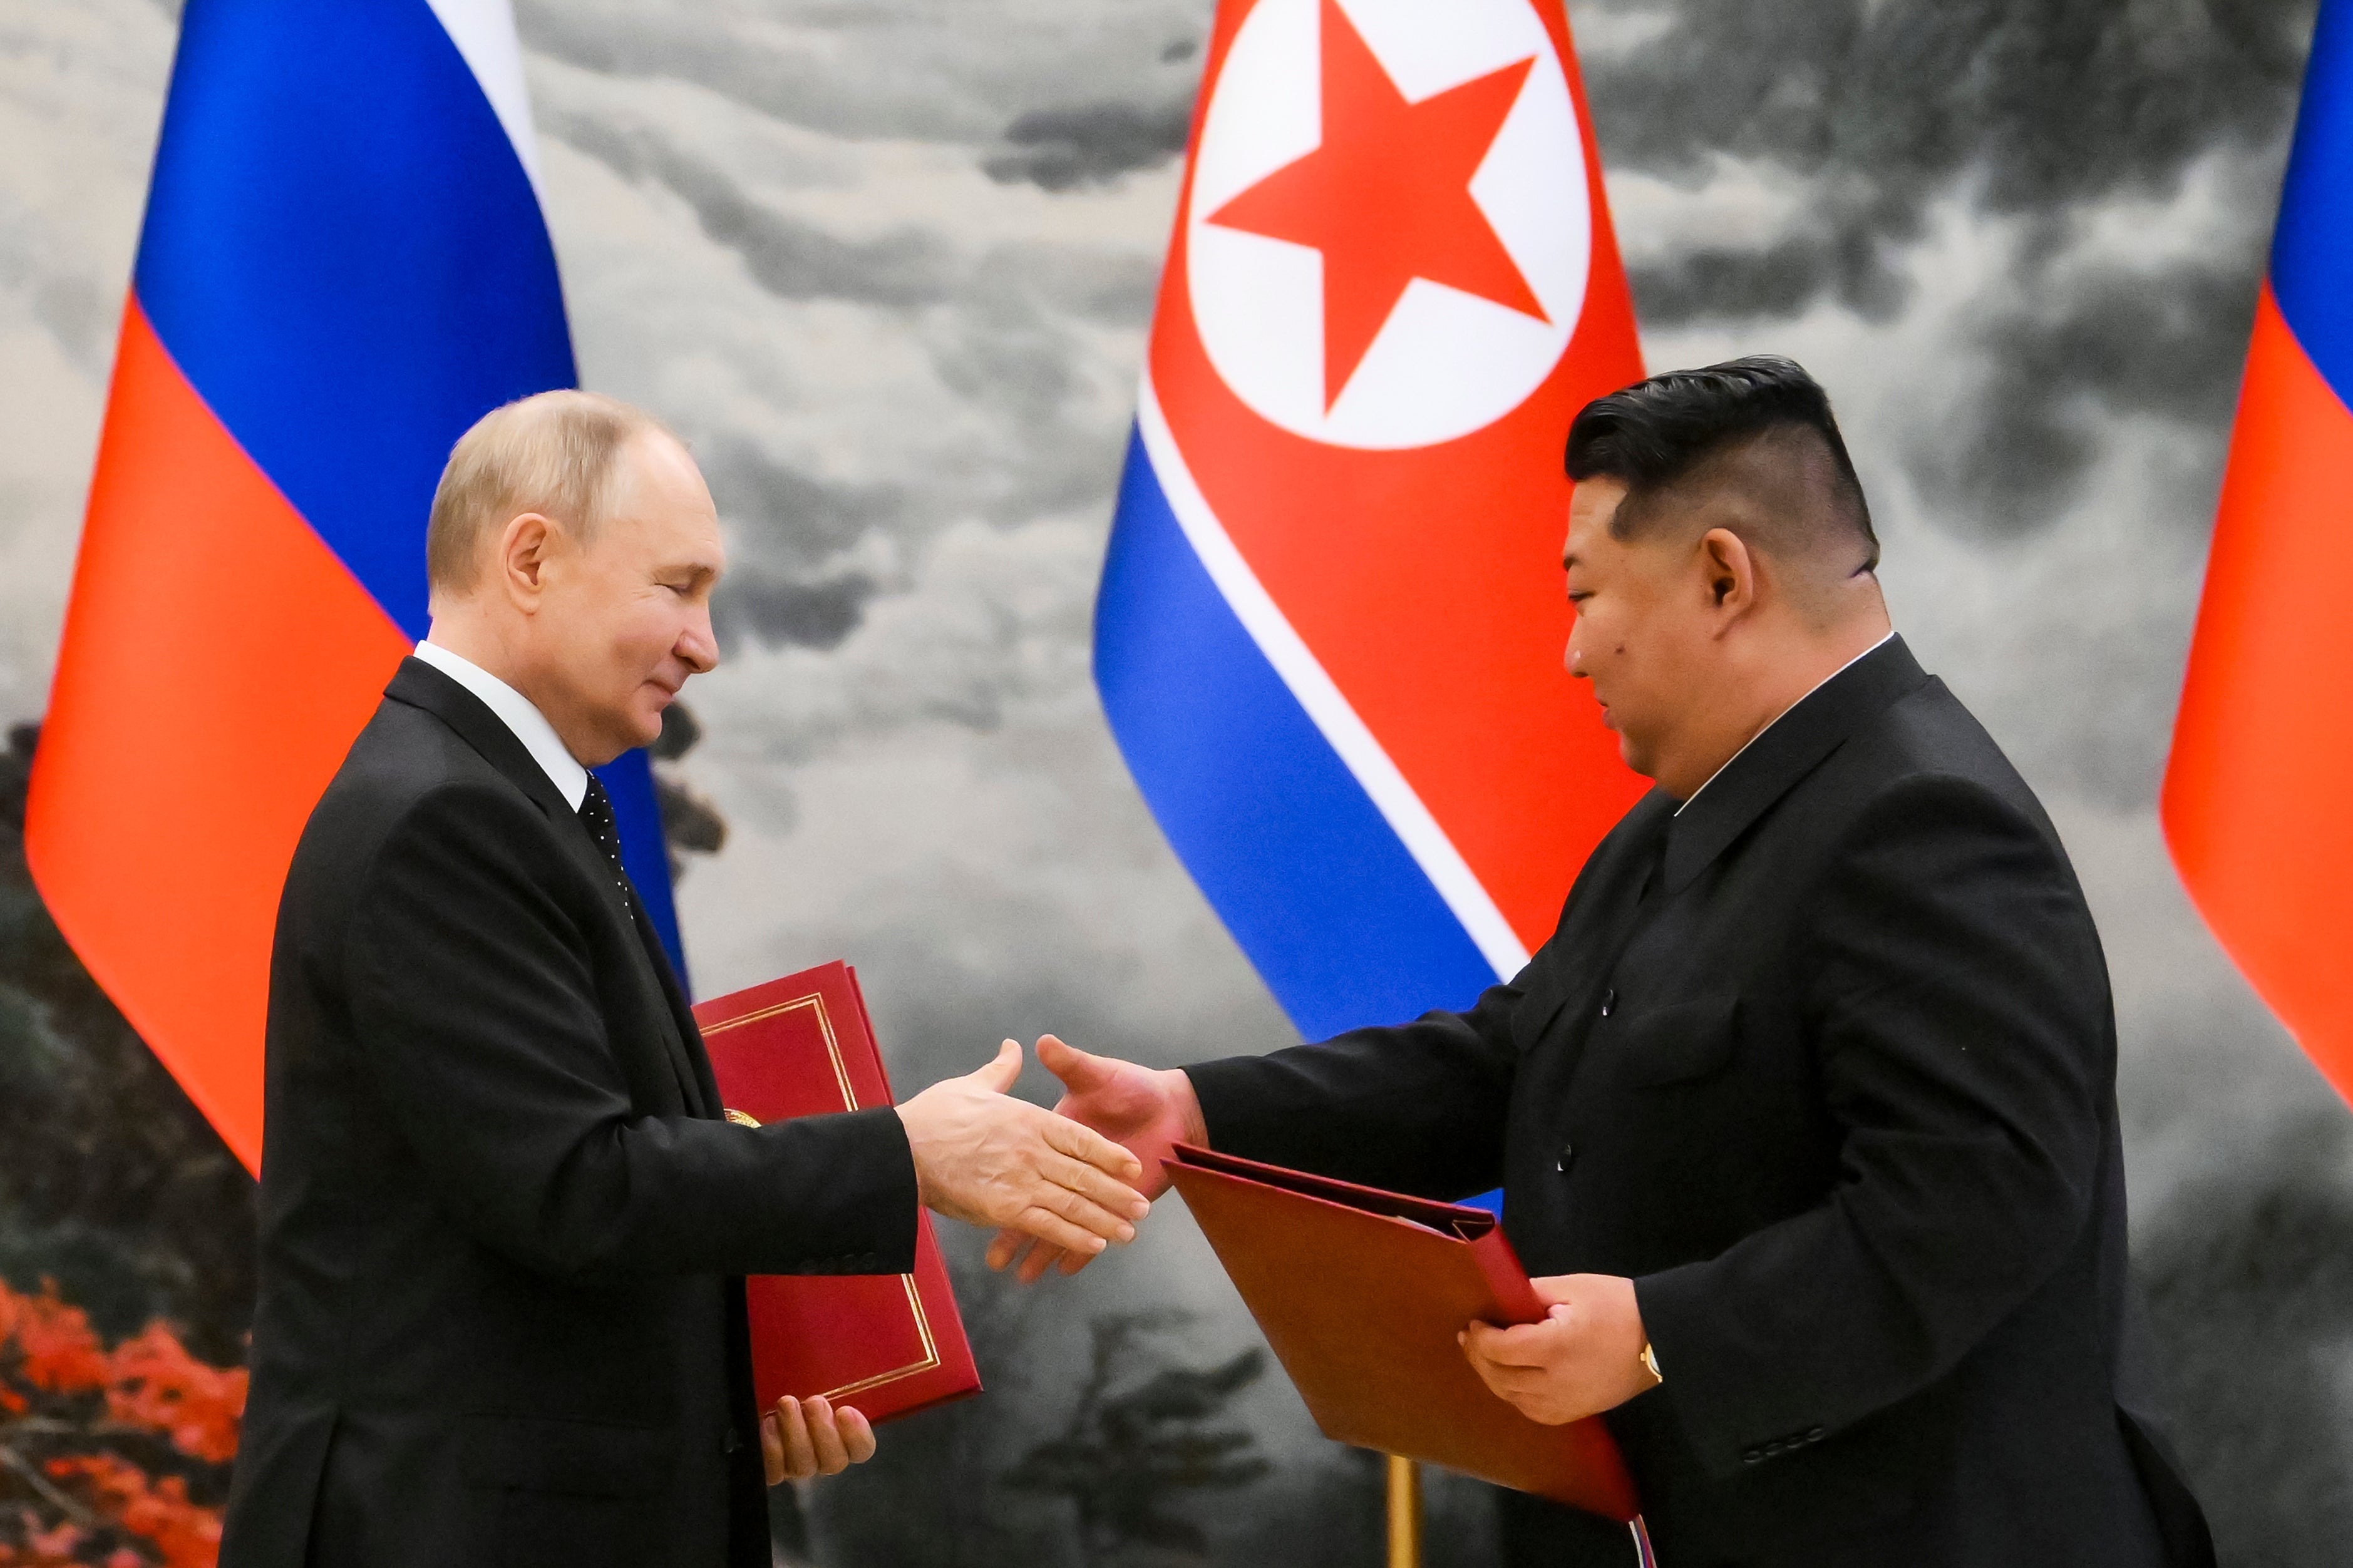 Russian President Vladimir Putin, left, and North Korean leader Kim Jong Un exchange documents during a ceremony